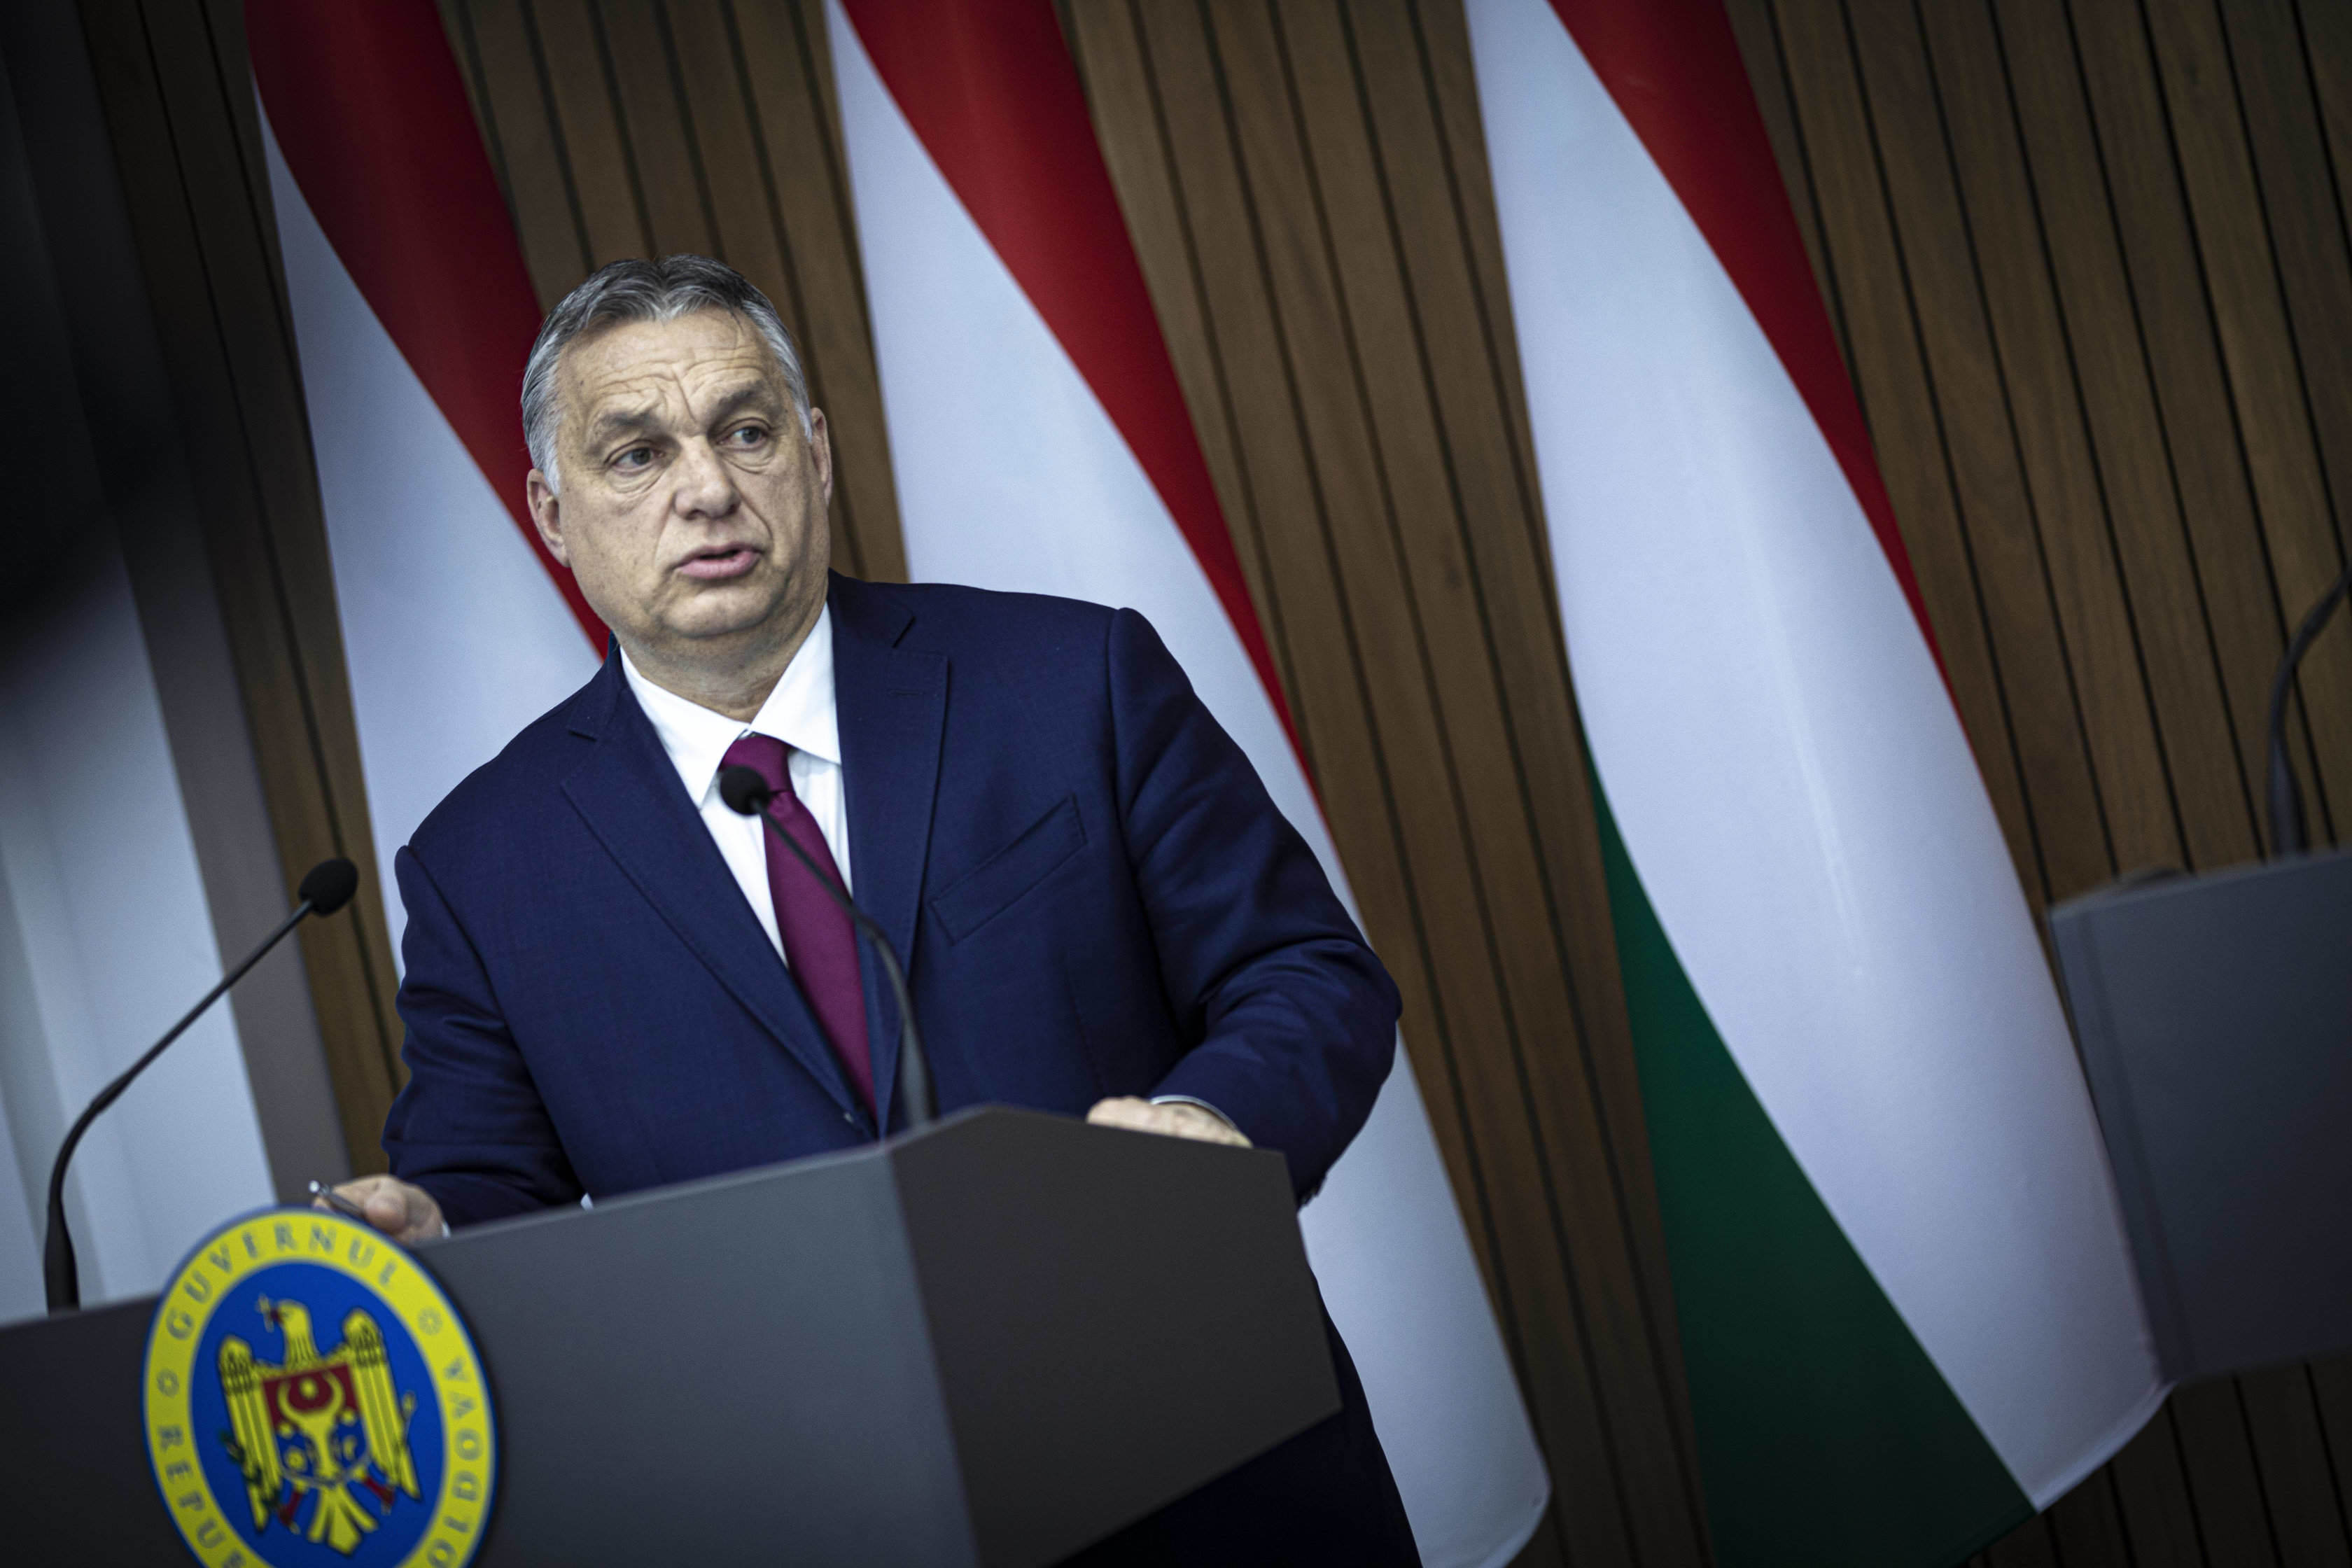 orbán in moldova